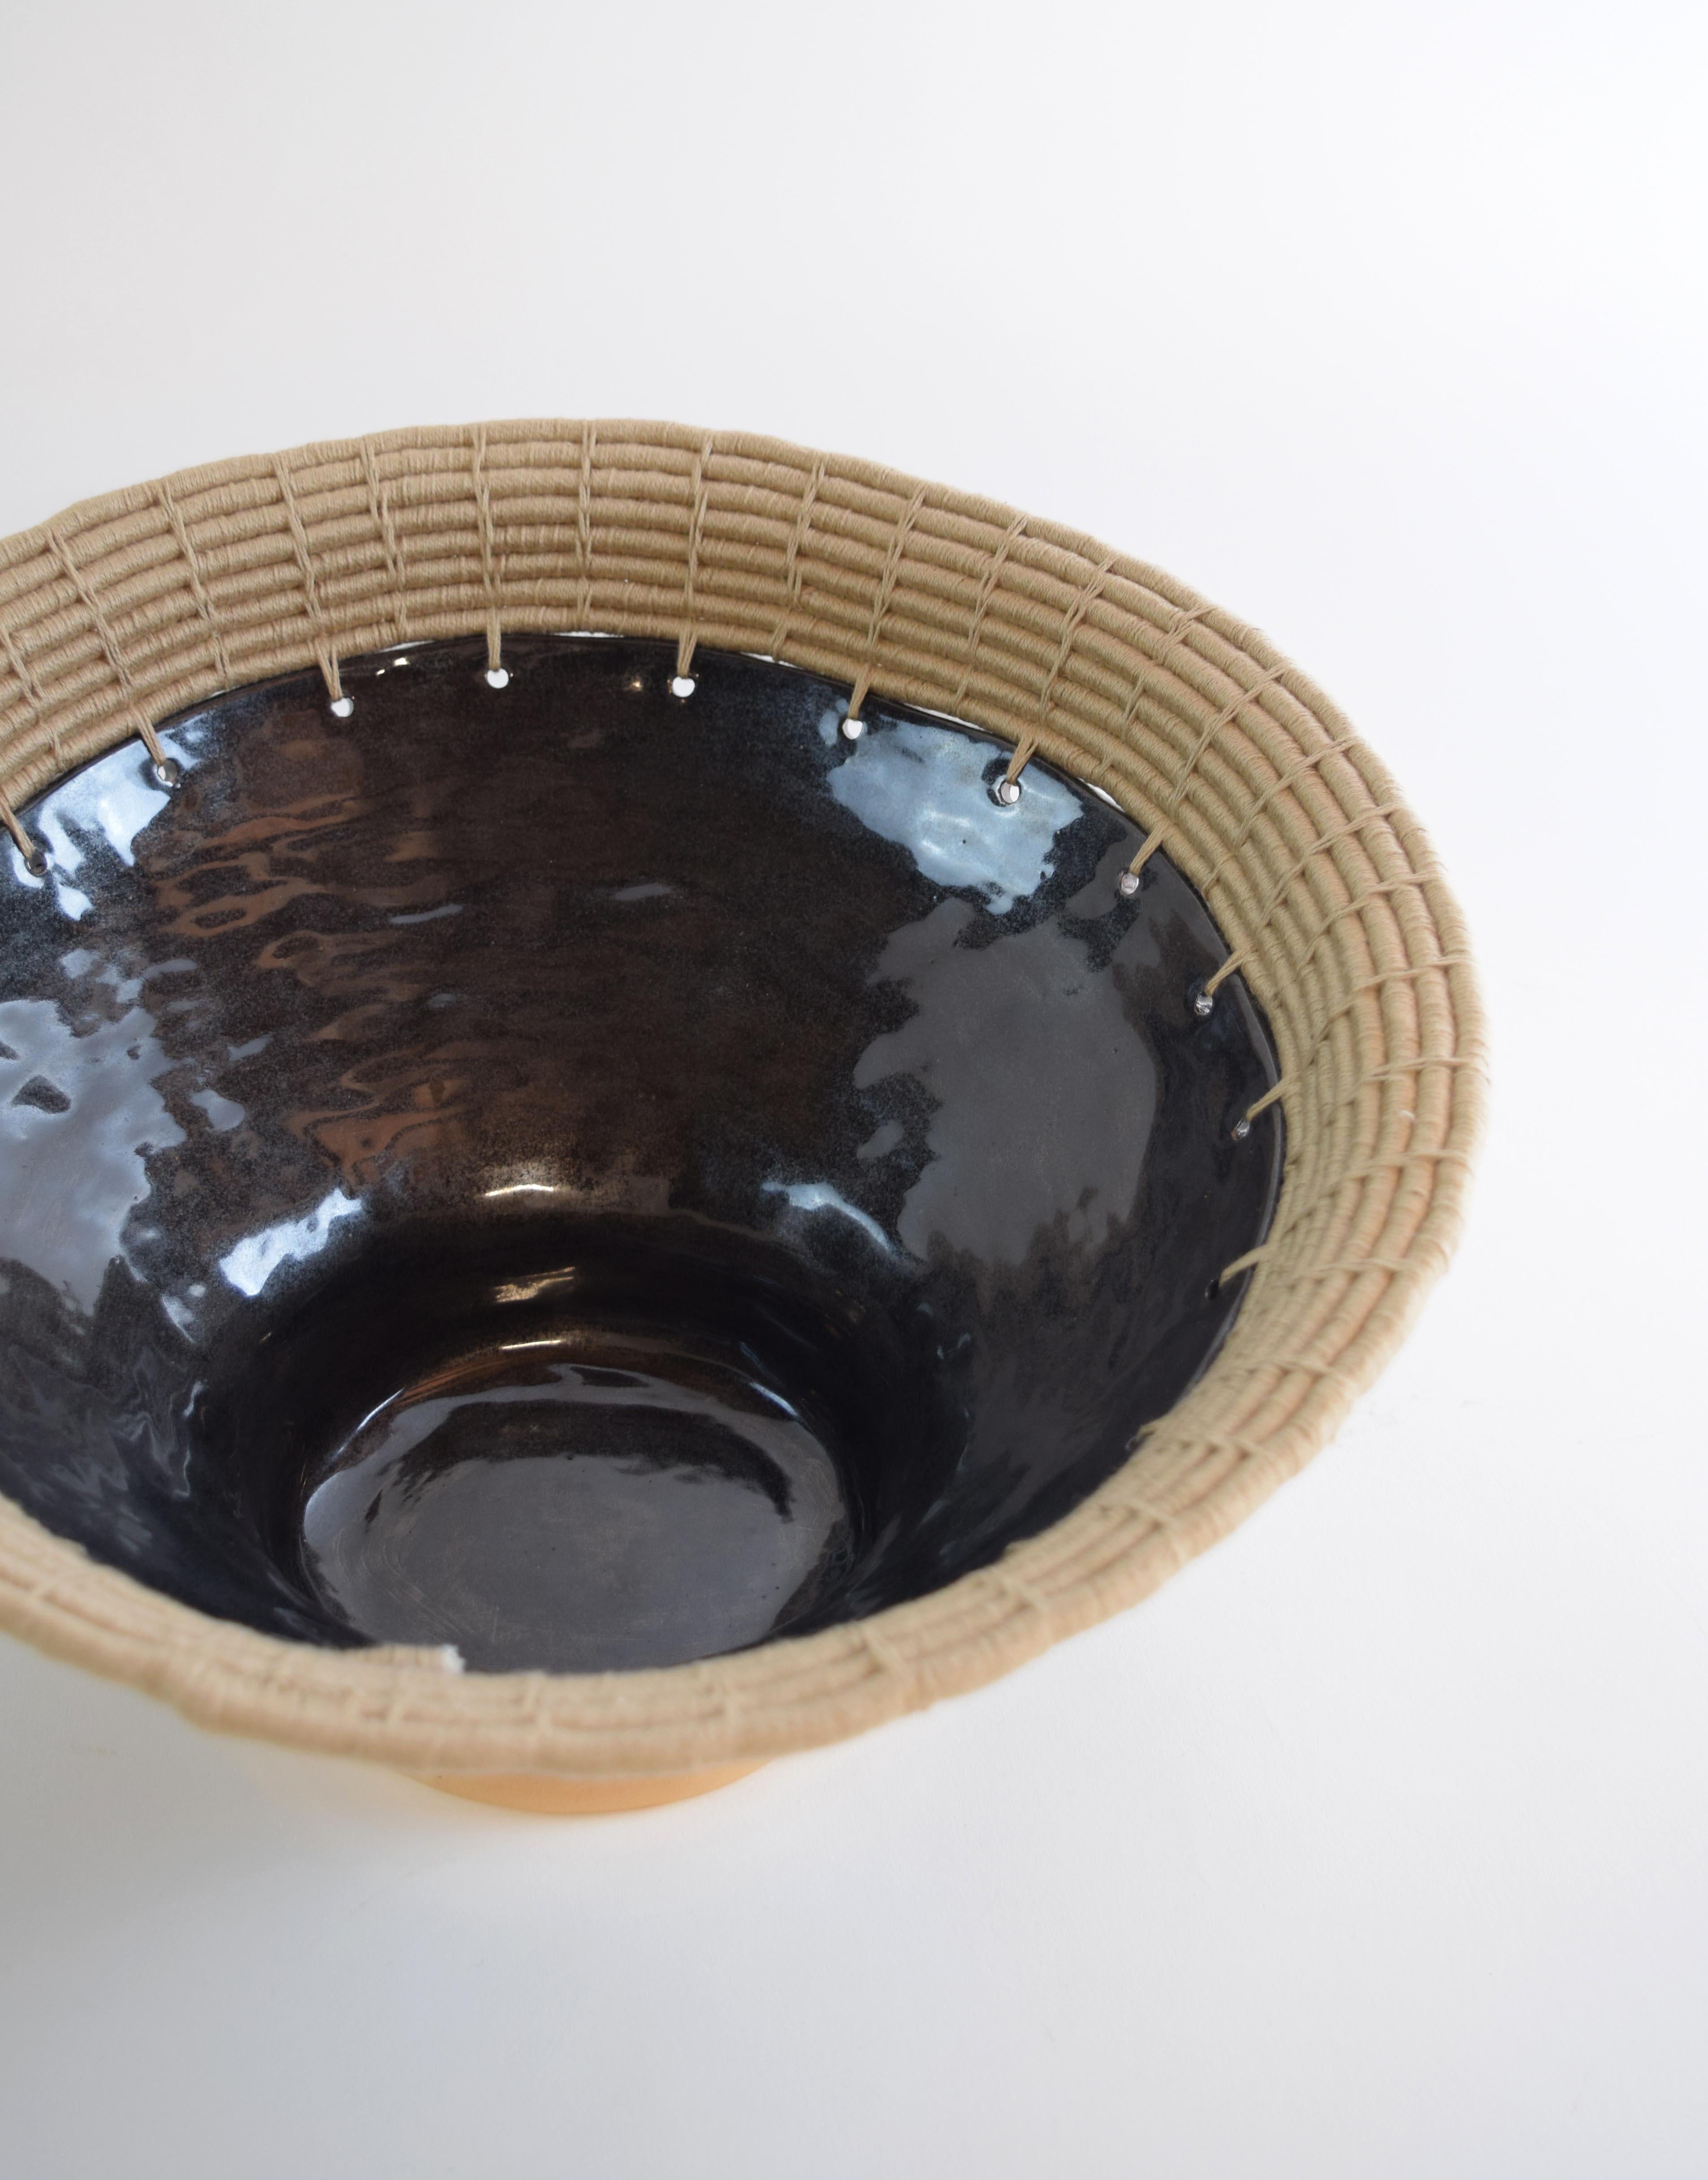 Organic Modern One of a Kind Asymmetrical Ceramic Bowl #778, Black Glaze & Tan Woven Cotton